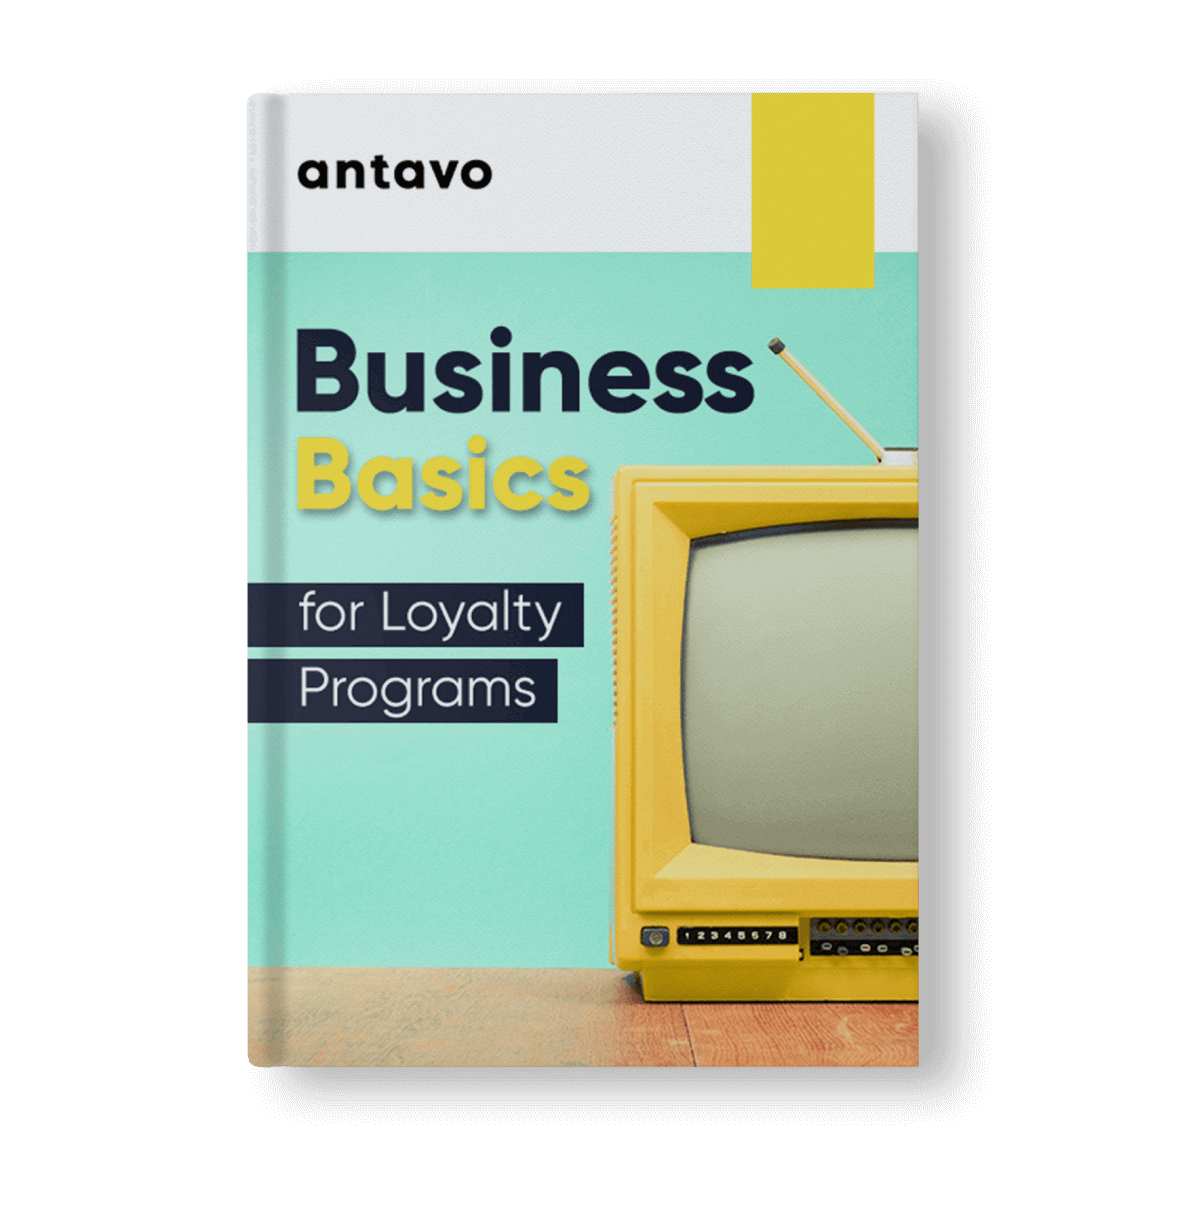 Antavo's Ebook: Business Basics for Loyalty Programs